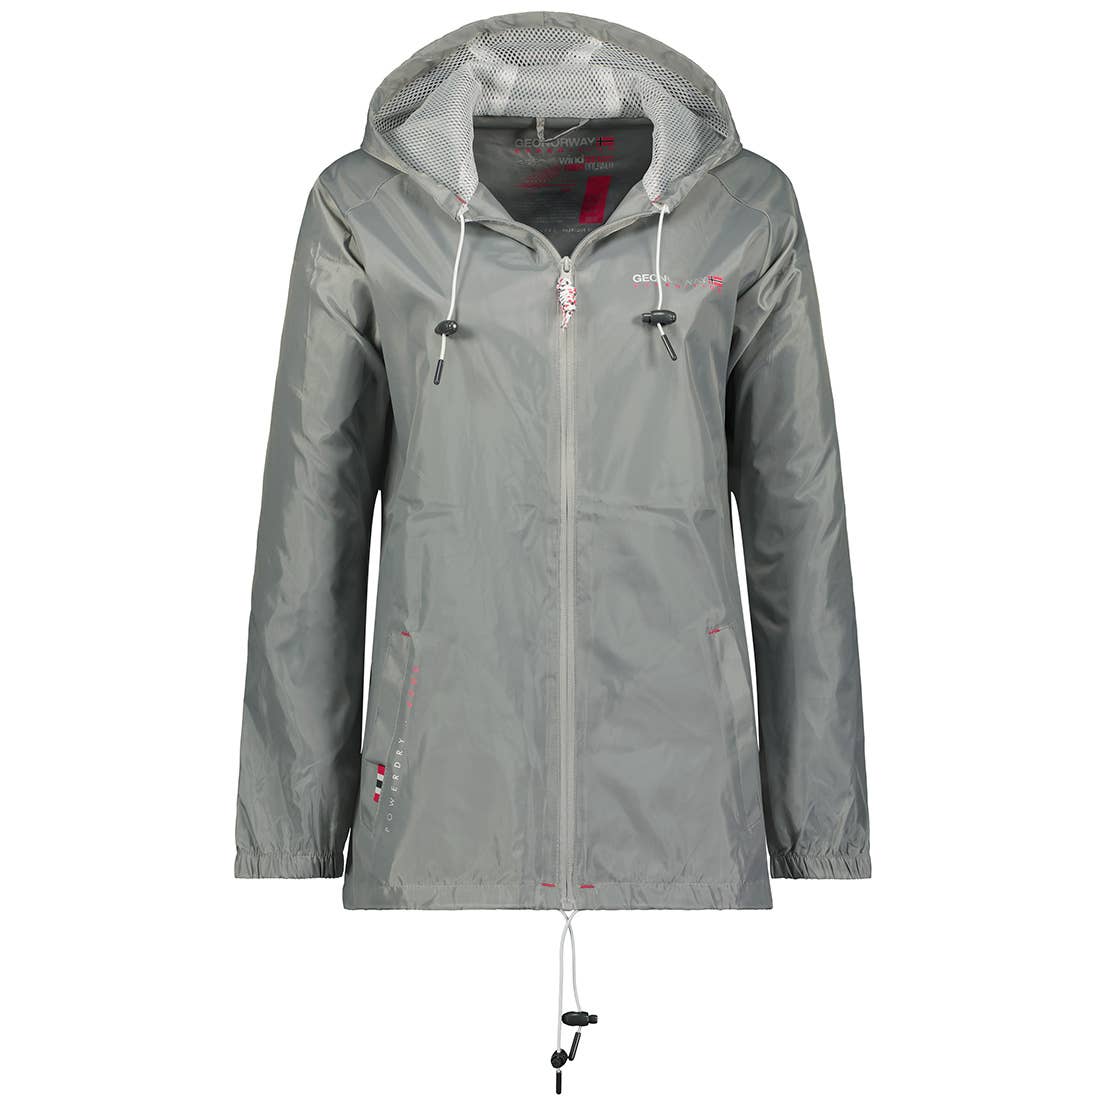 Geographical Norway Women's Lightweight Rain jacket